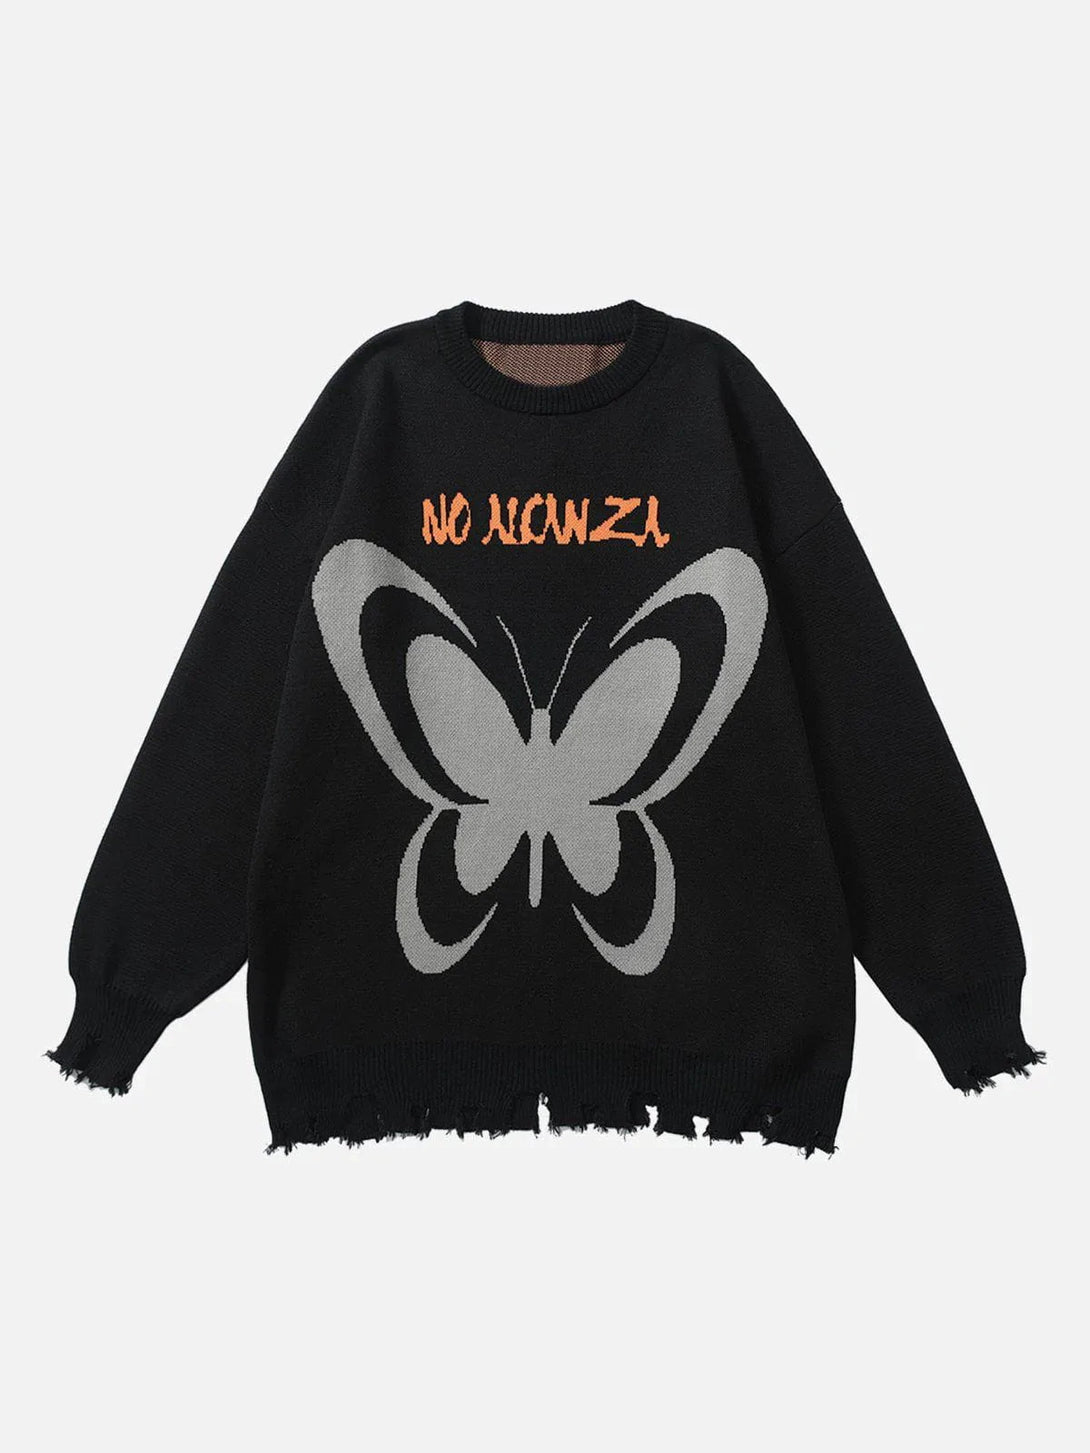 Majesda® - Butterfly Alphabet Print Sweater outfit ideas streetwear fashion